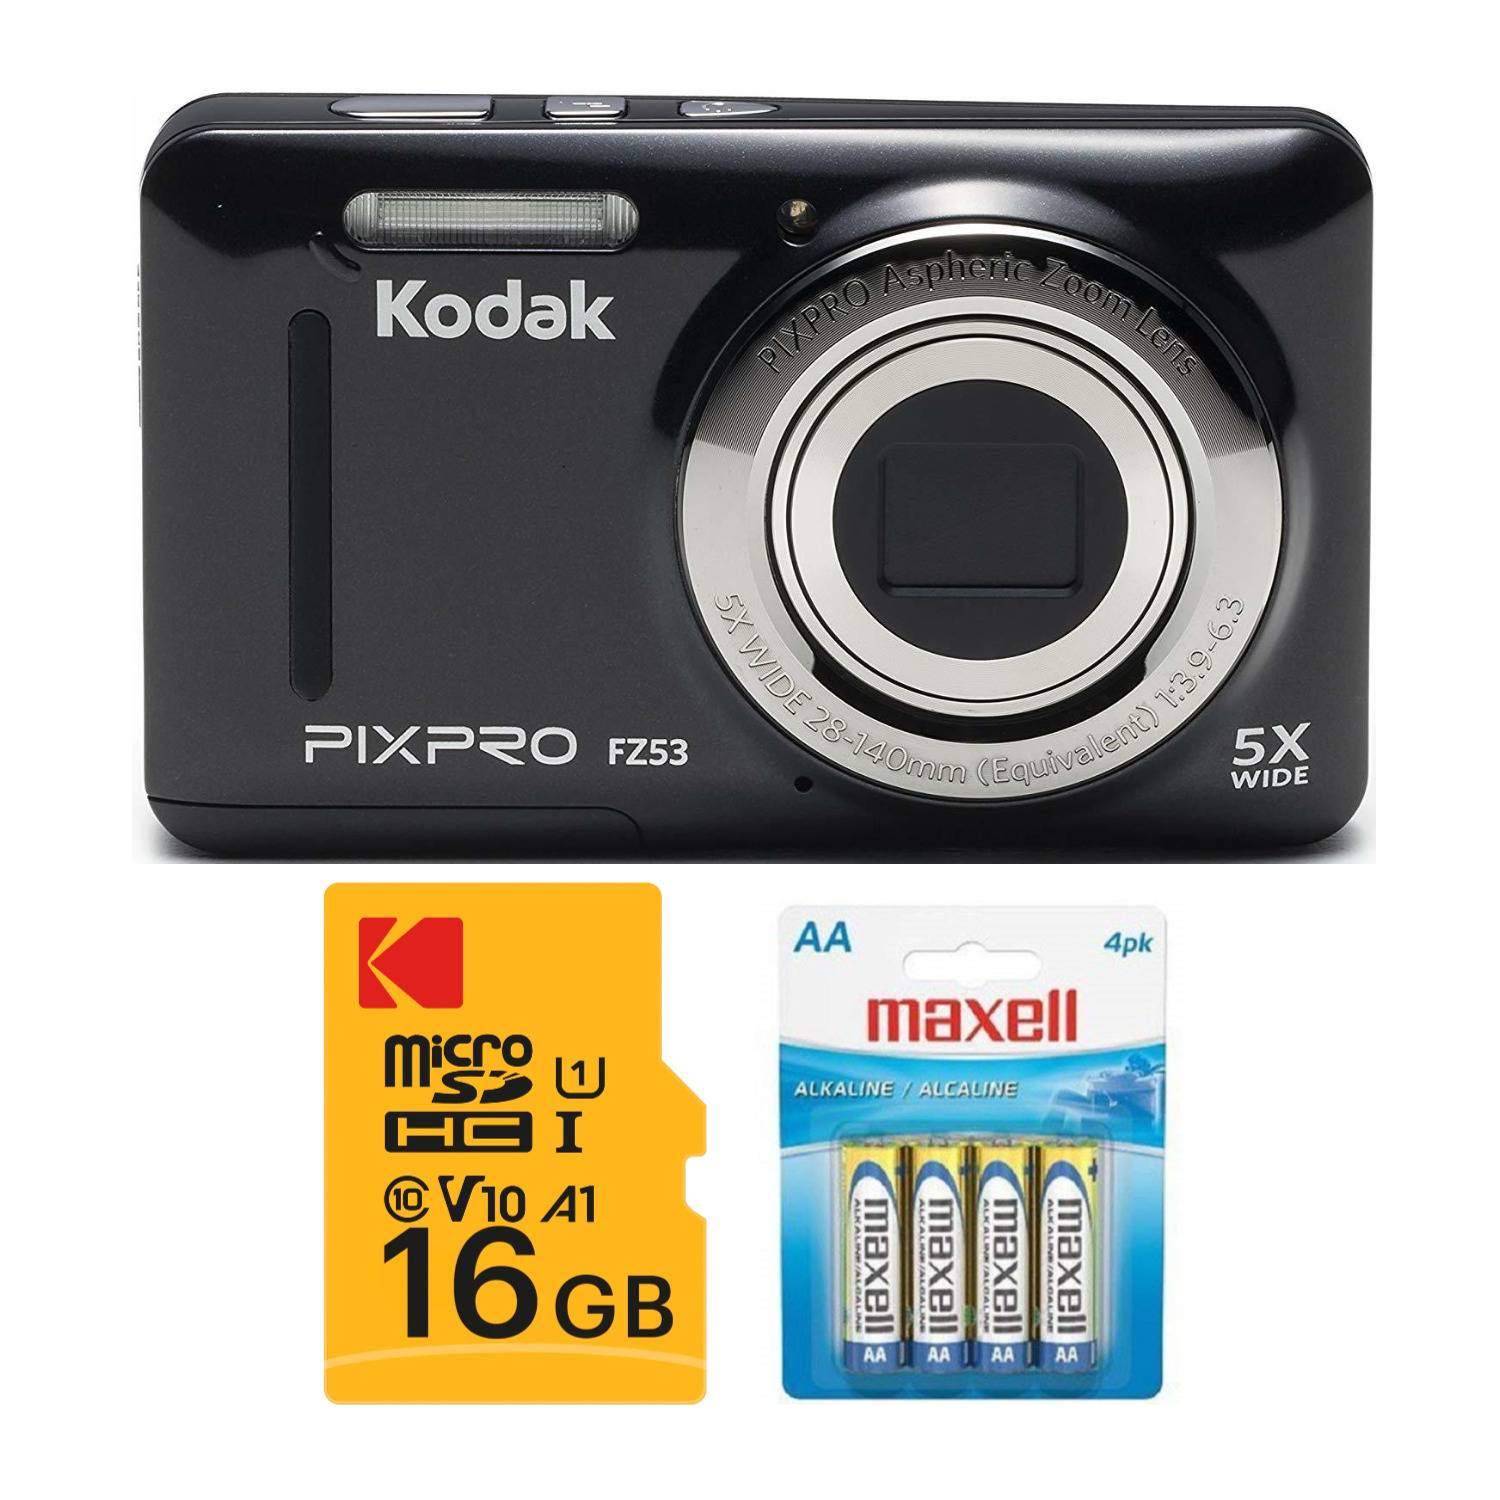 Kodak PIXPRO Friendly Zoom FZ53 Digital Camera (Black)  with 16GB SD Card and Accessory Bundle